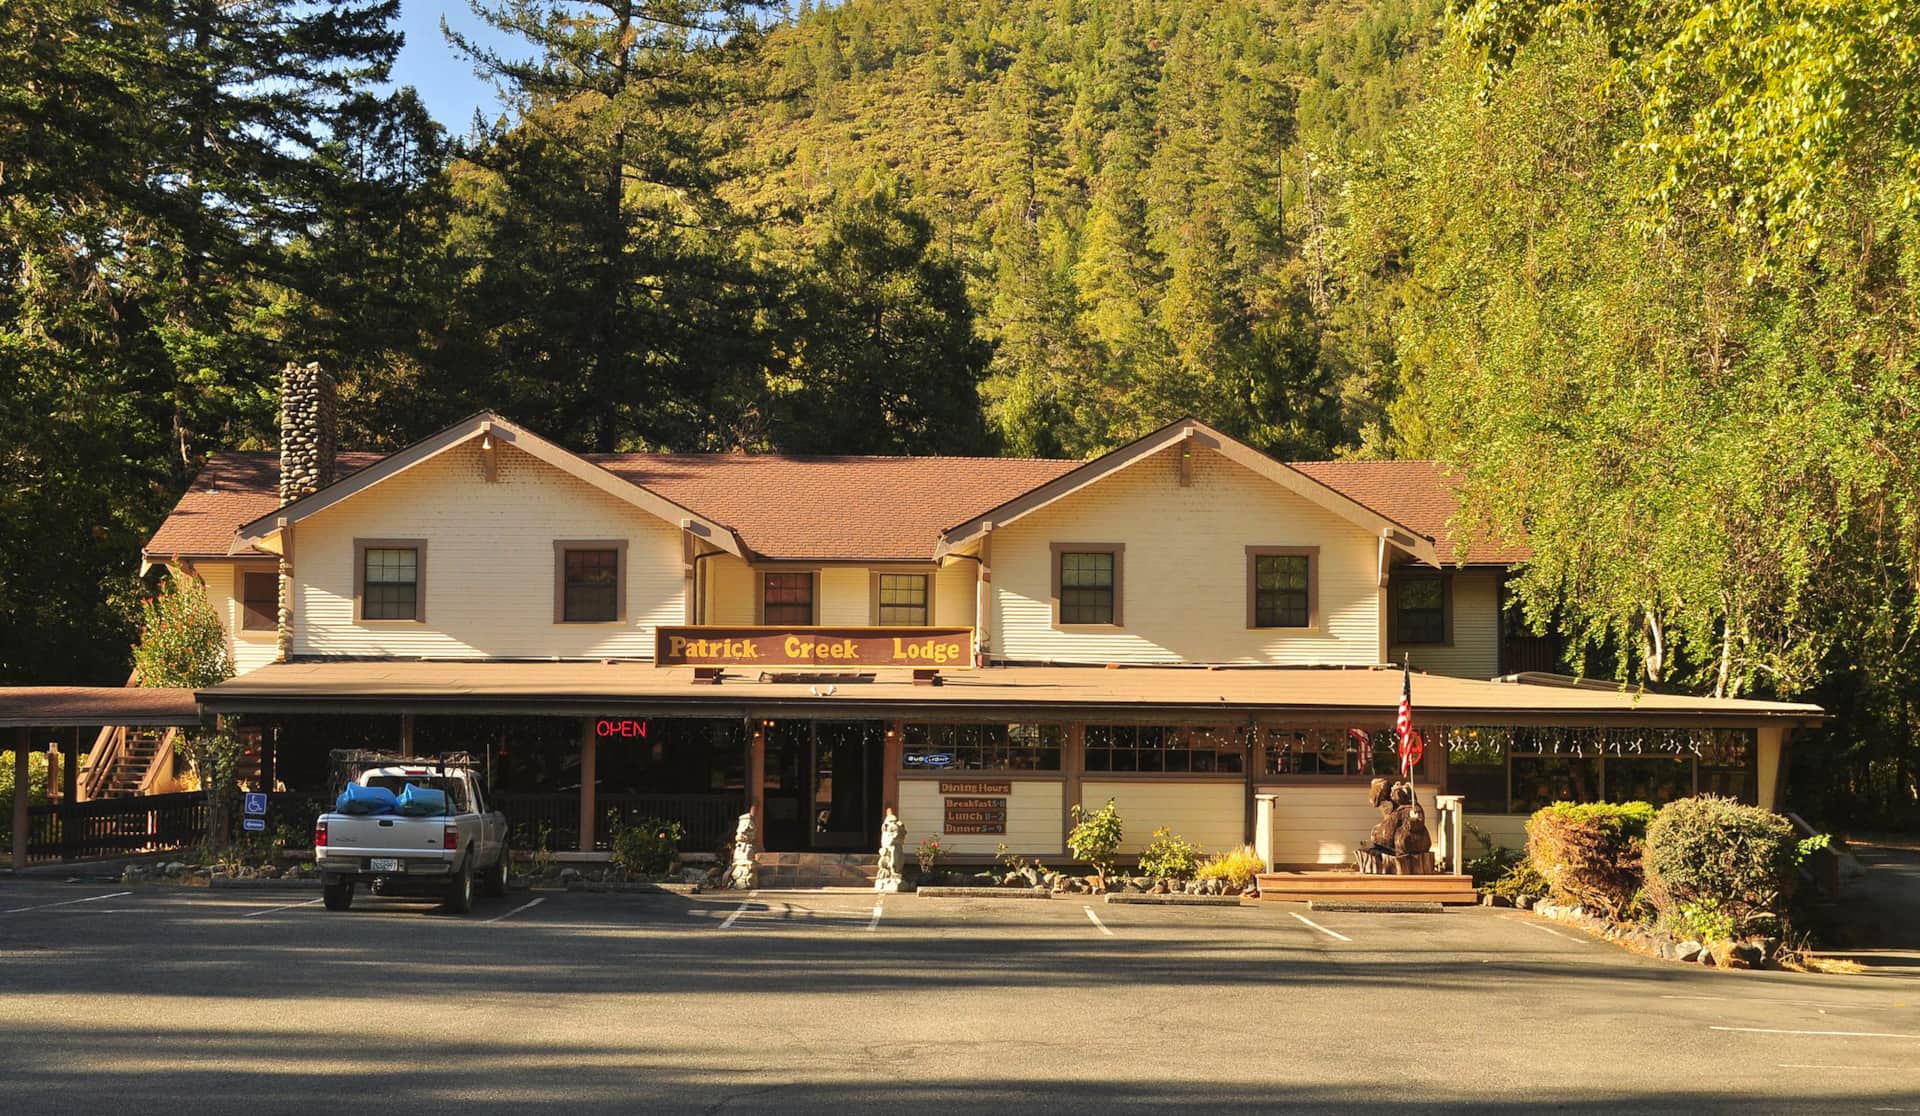 Patrick Creek Lodge